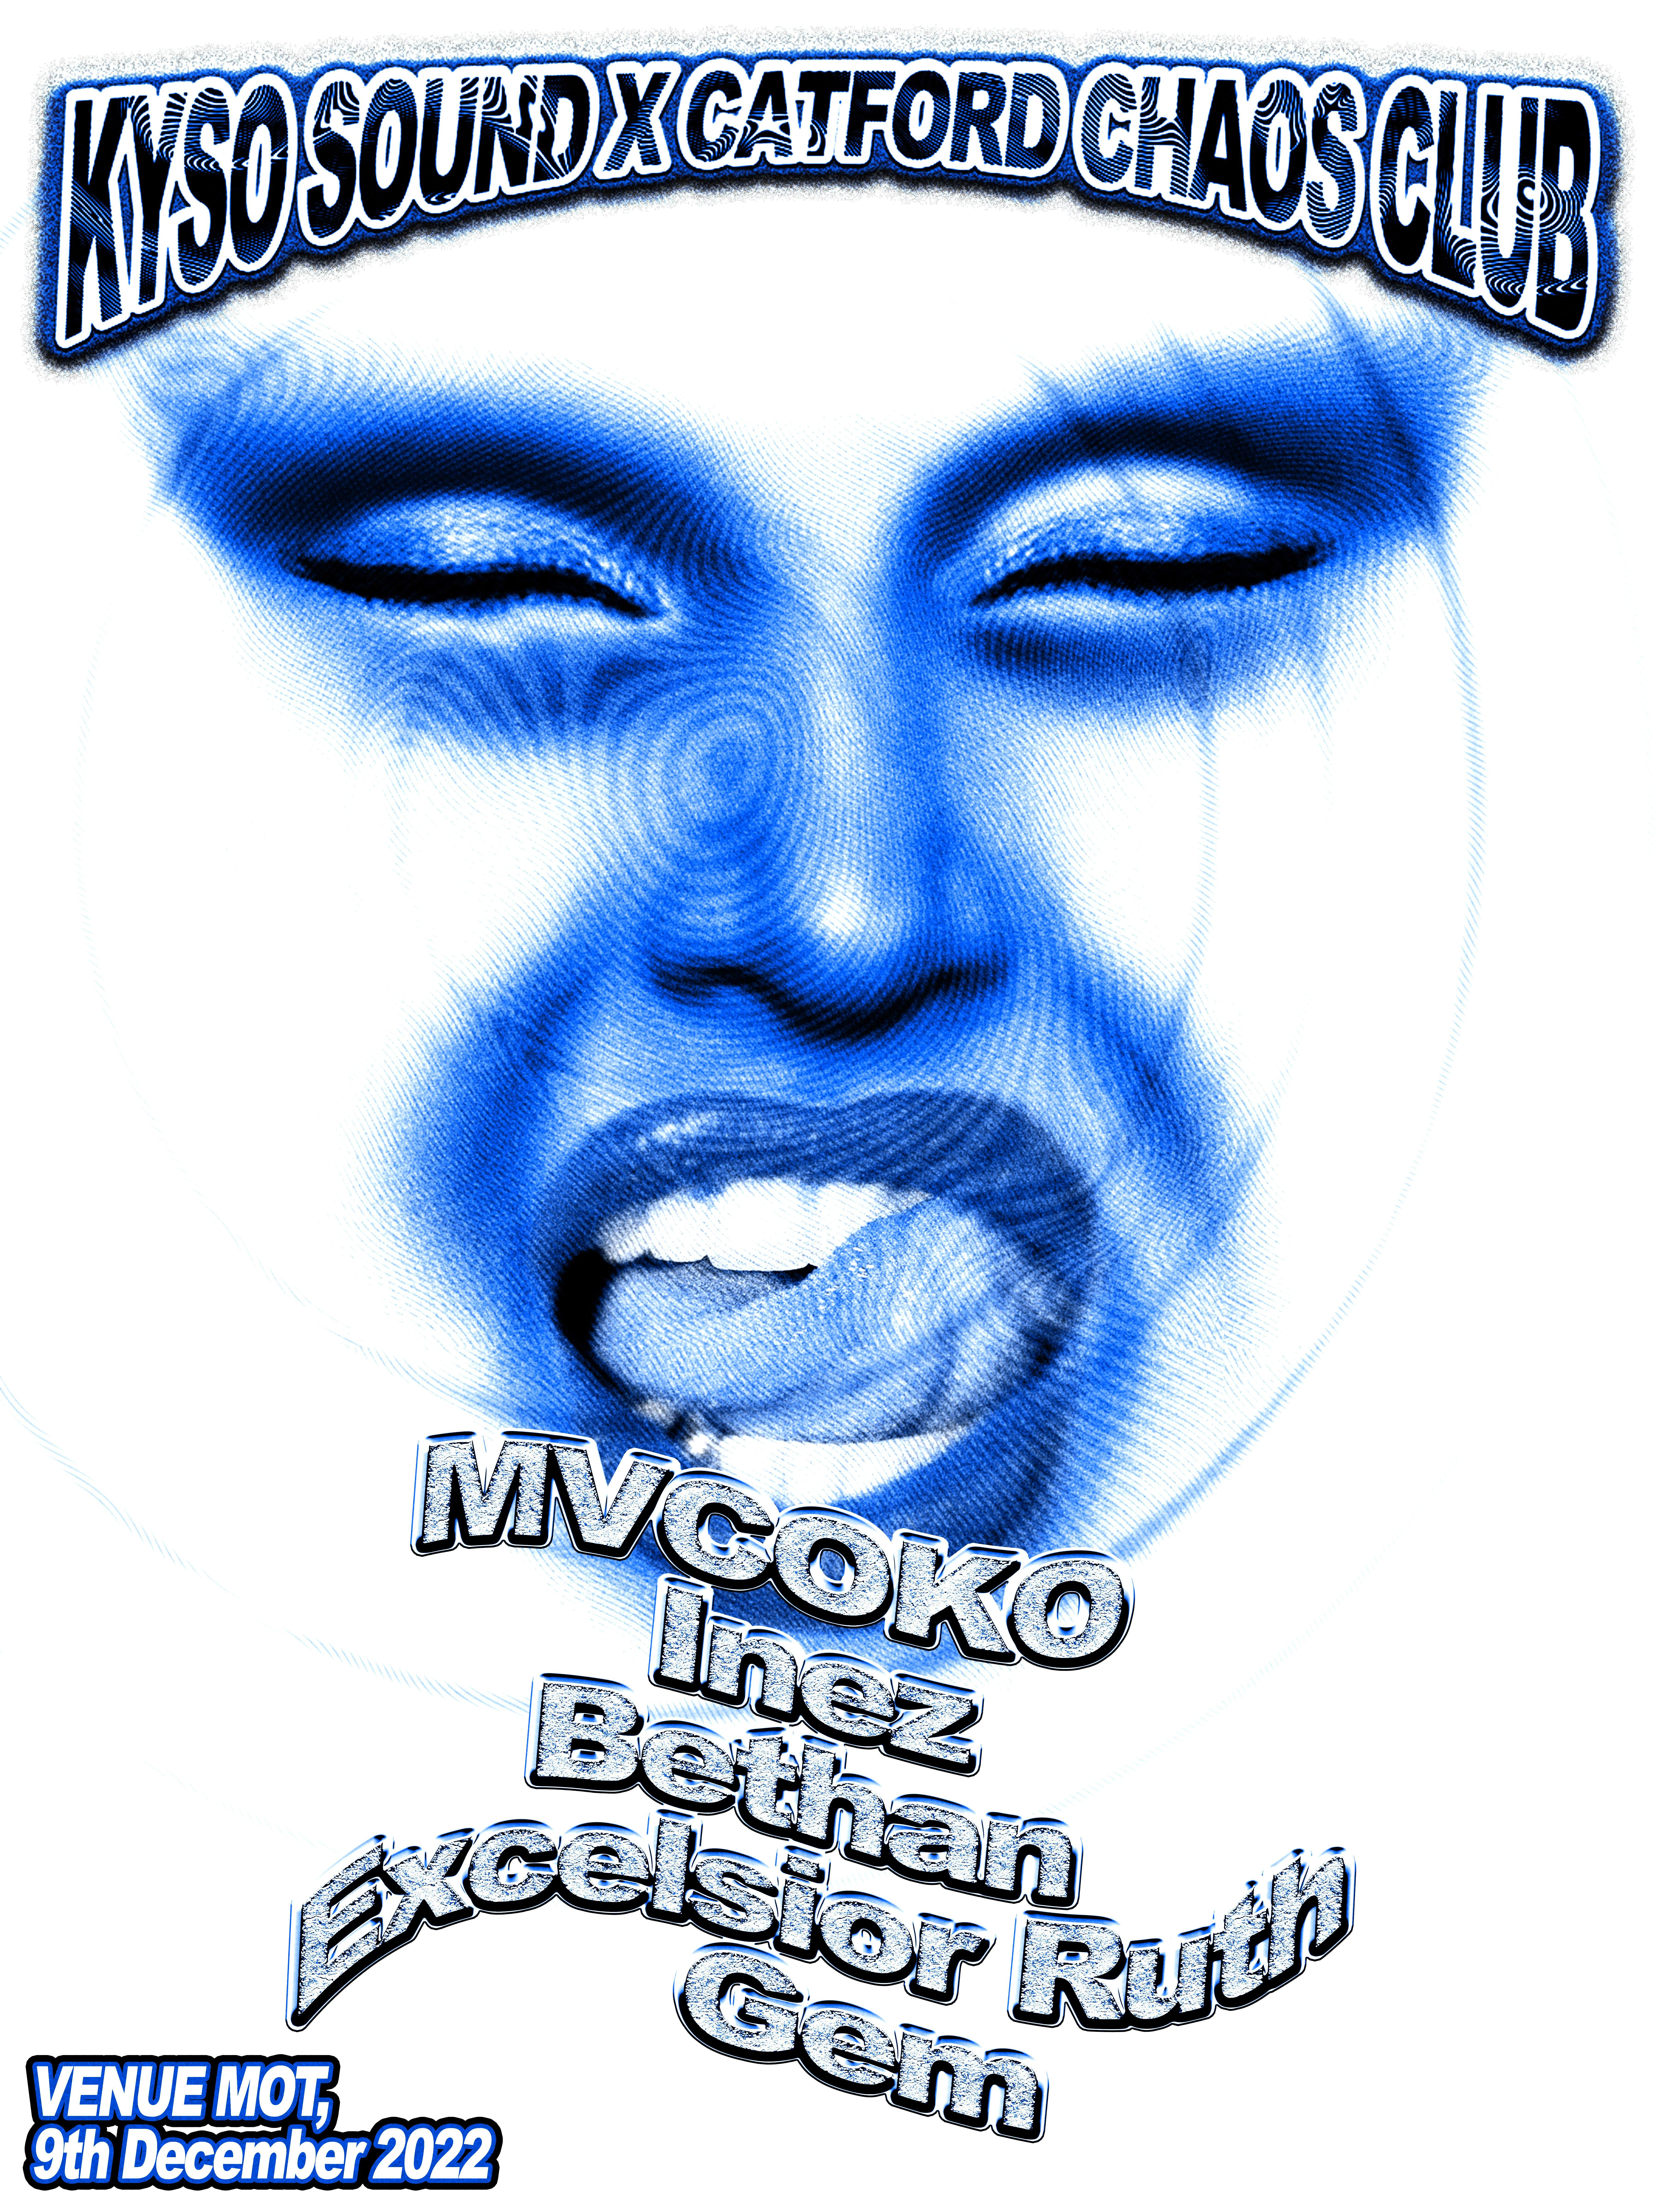 KYSO SOUND X Catford Chaos Club - MVCOCKO, Inez, Bethan, Excelsior Ruth,  GEM at Venue MOT, London